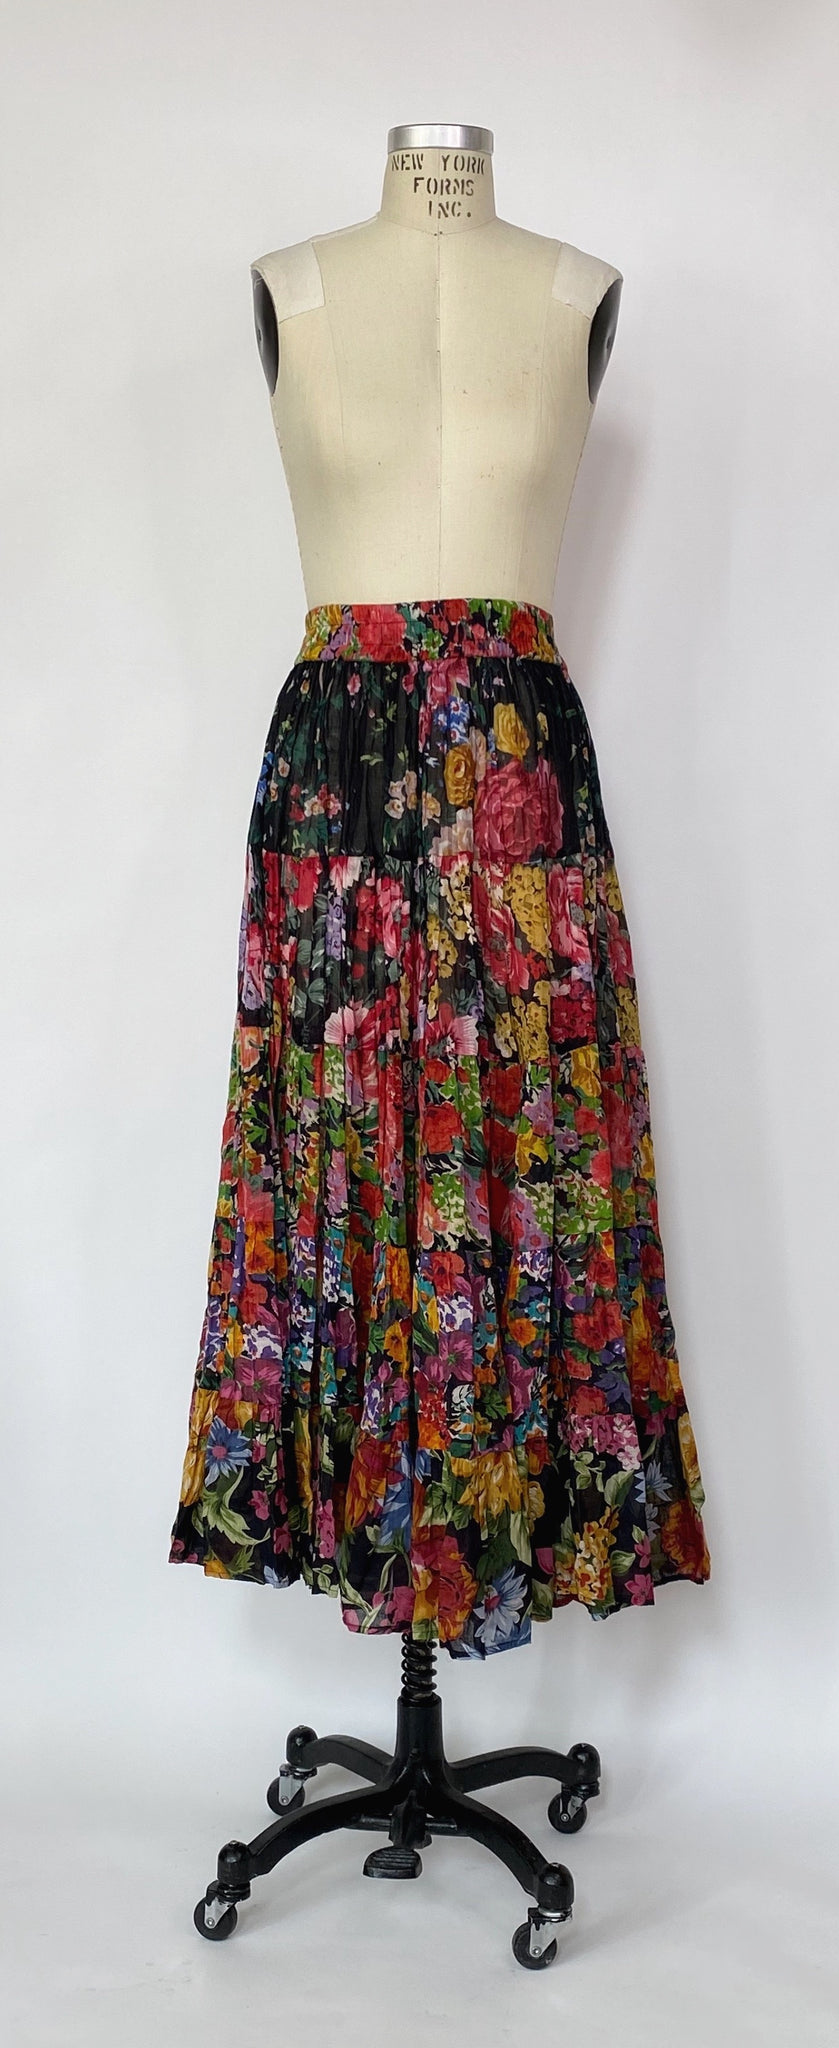 Moody Floral Midi Skirt